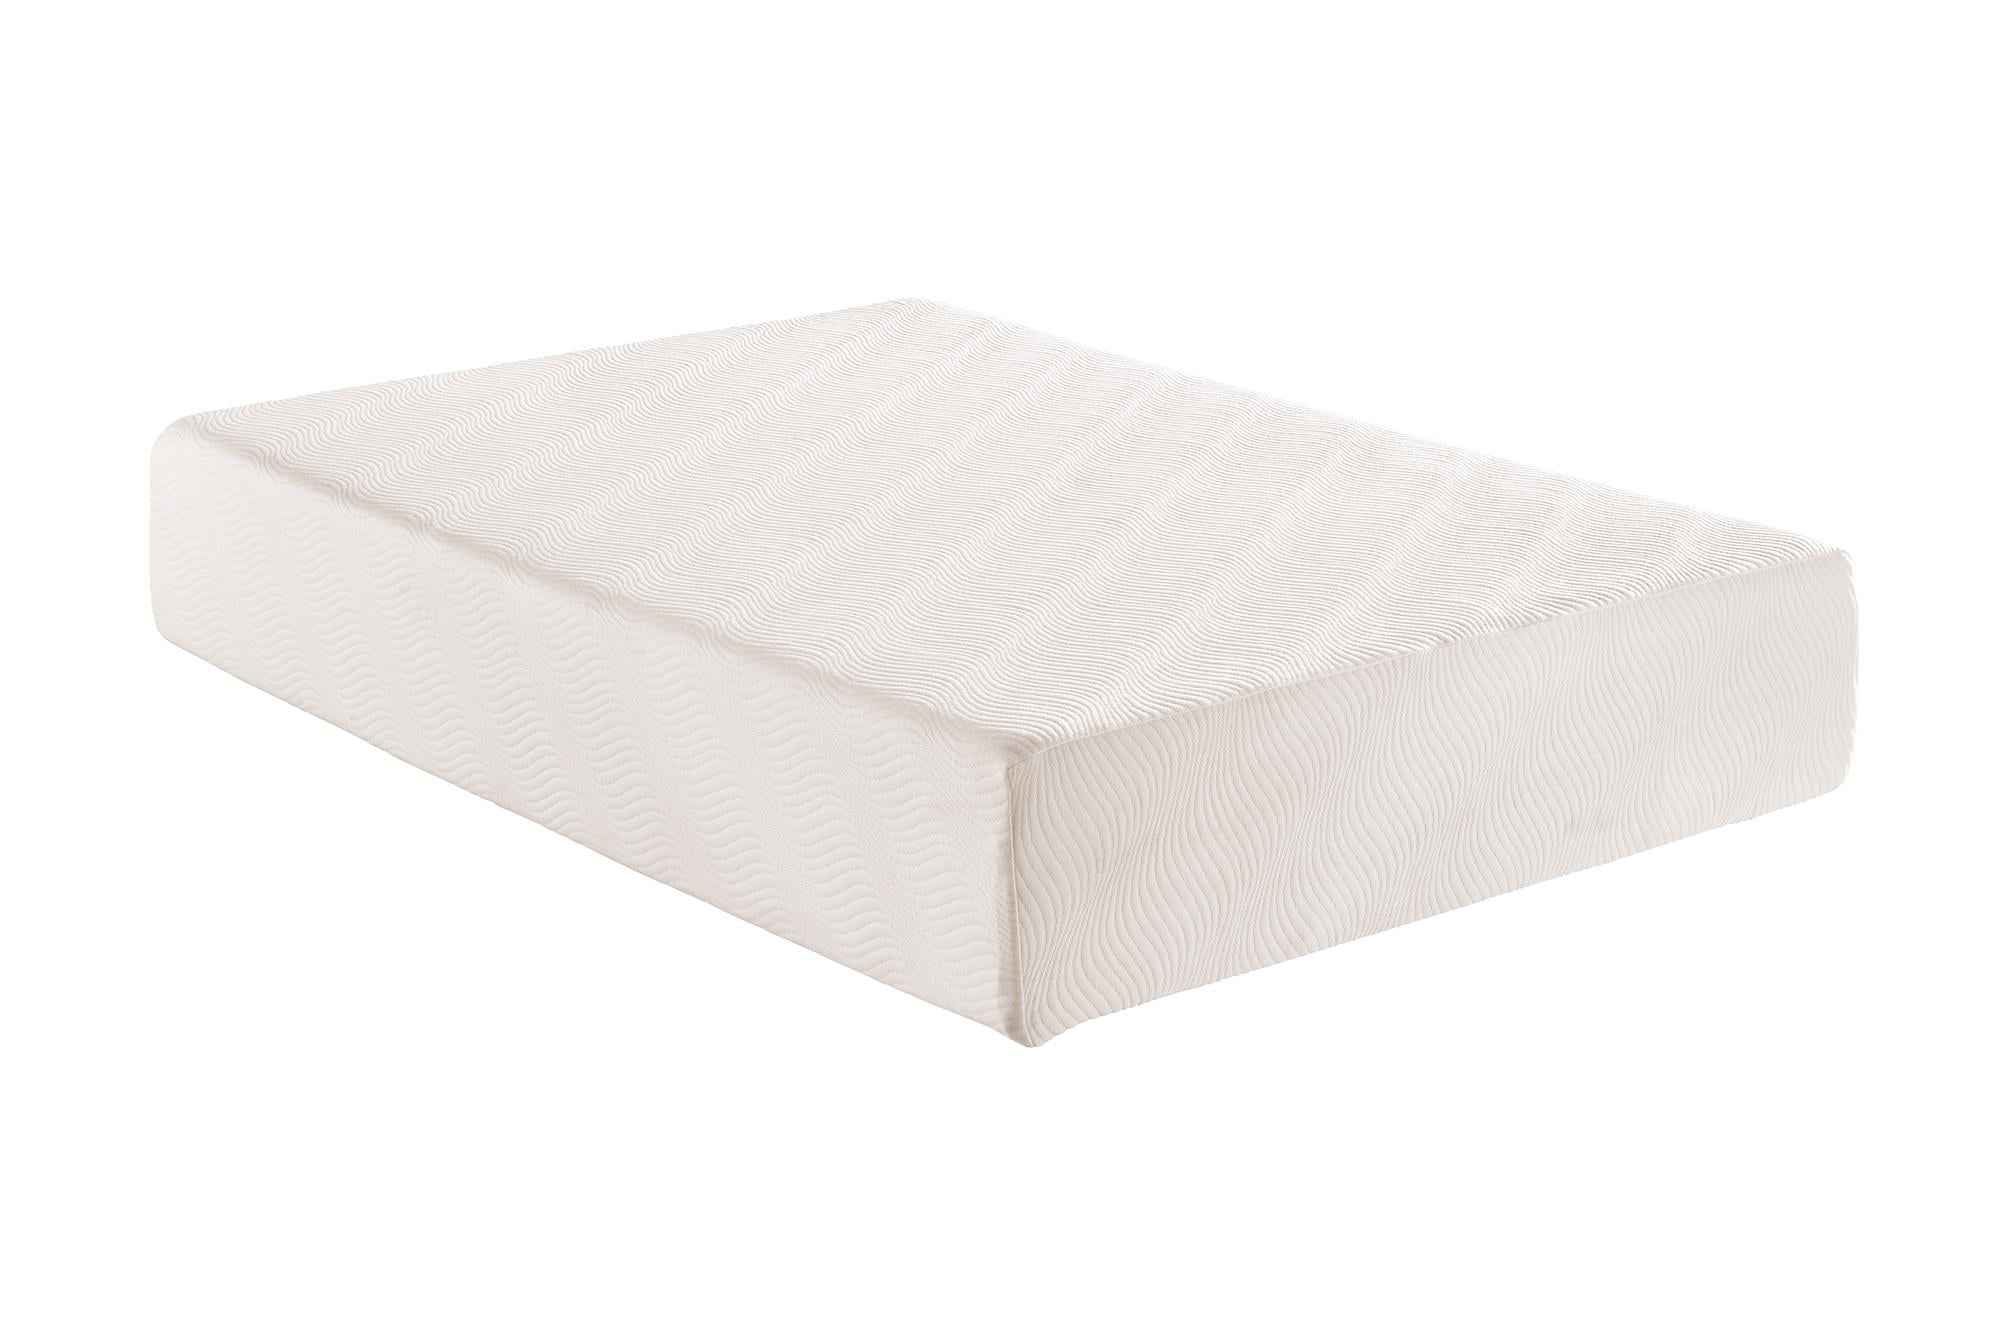 mainstays 6 inch memory foam bunk bed mattress